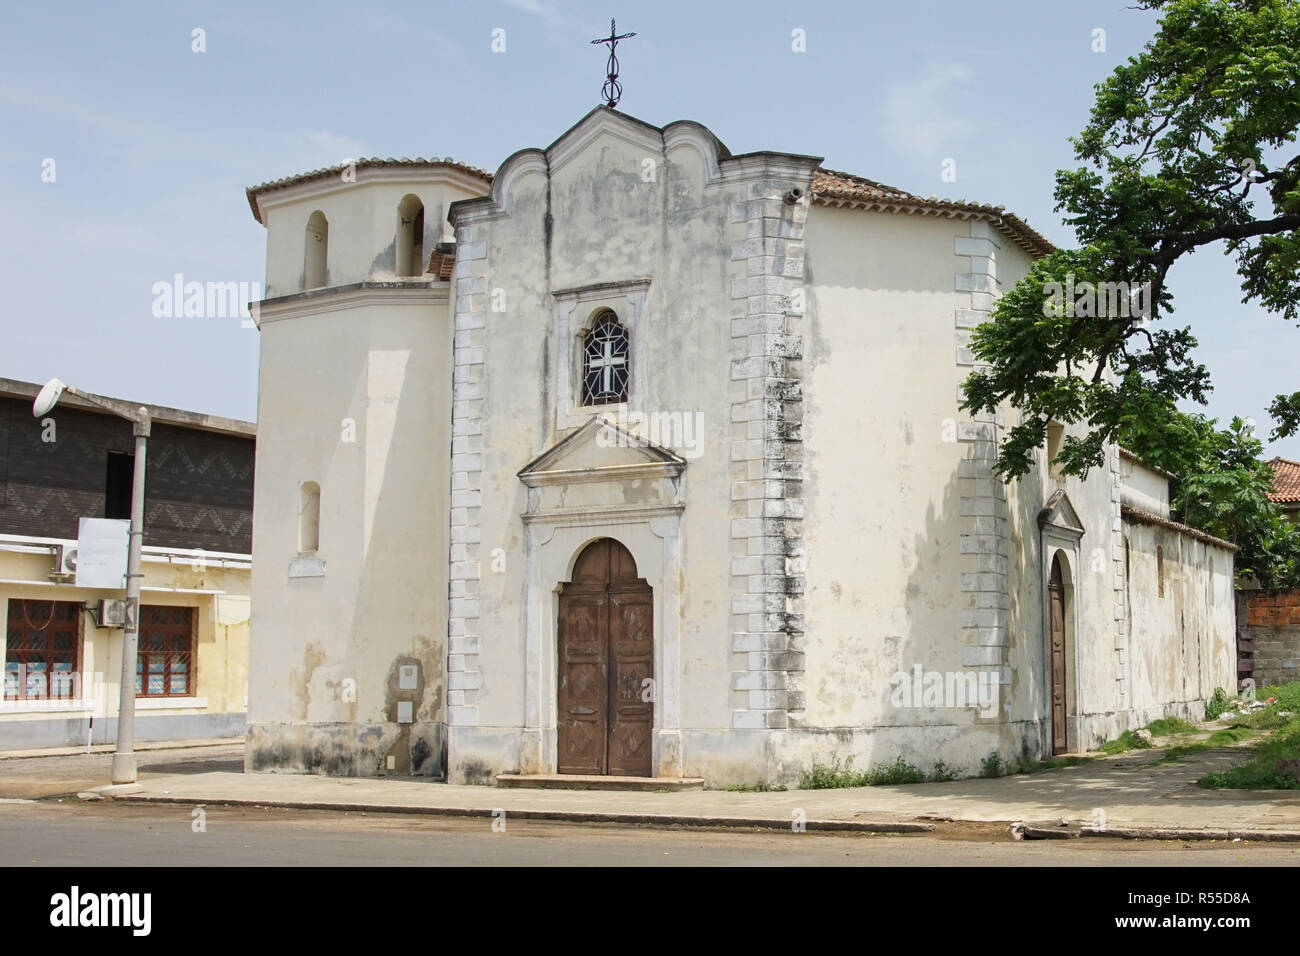 church in sao tome city,sao tome and principe,africa Stock Photo